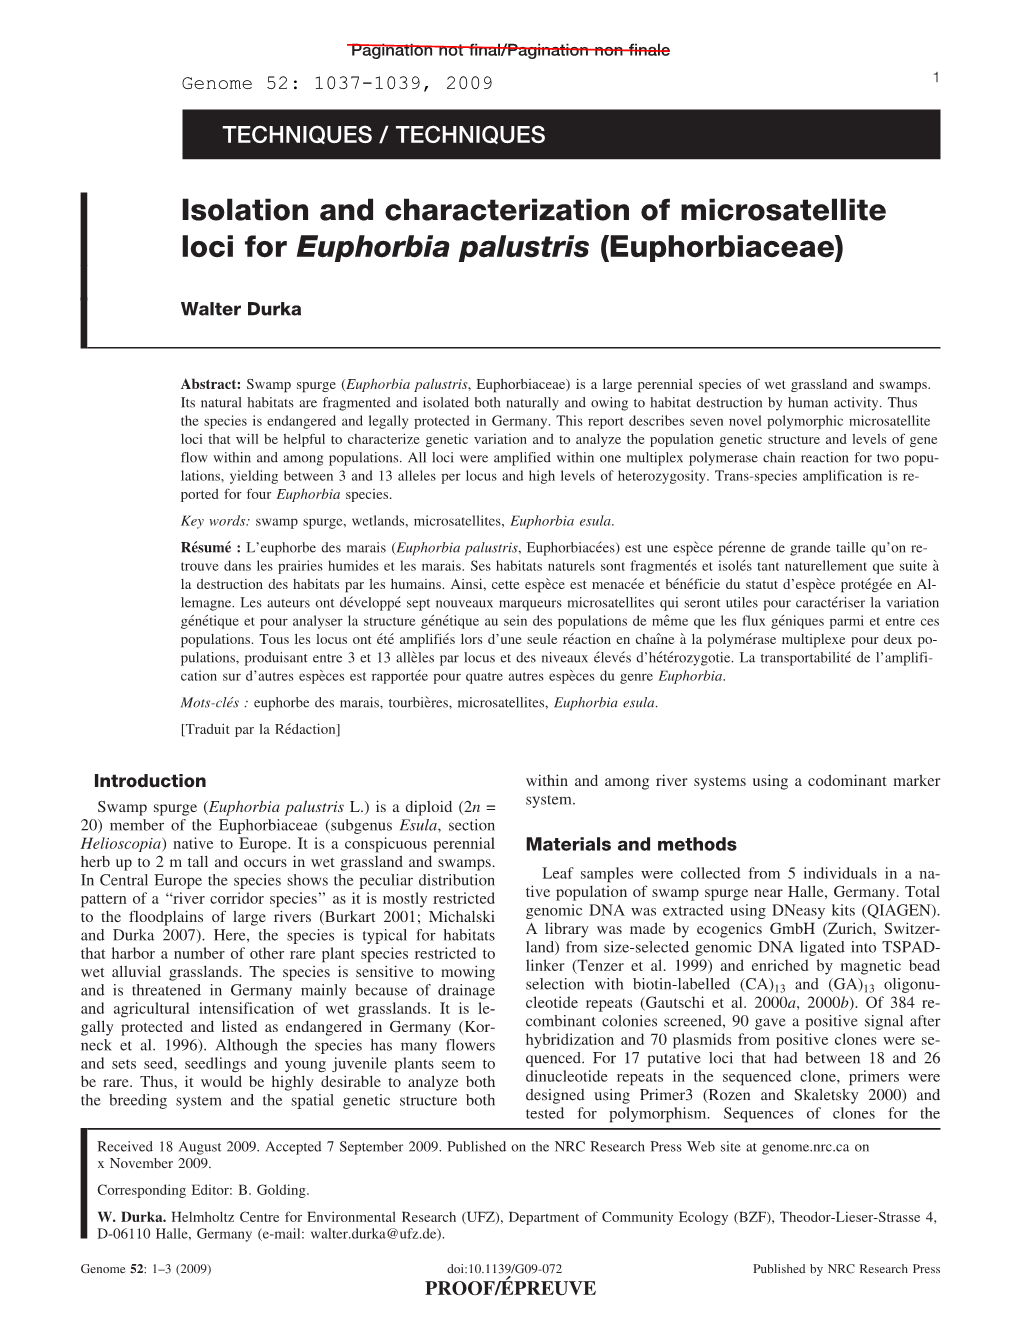 Isolation and Characterization of Microsatellite Loci for Euphorbia Palustris (Euphorbiaceae)